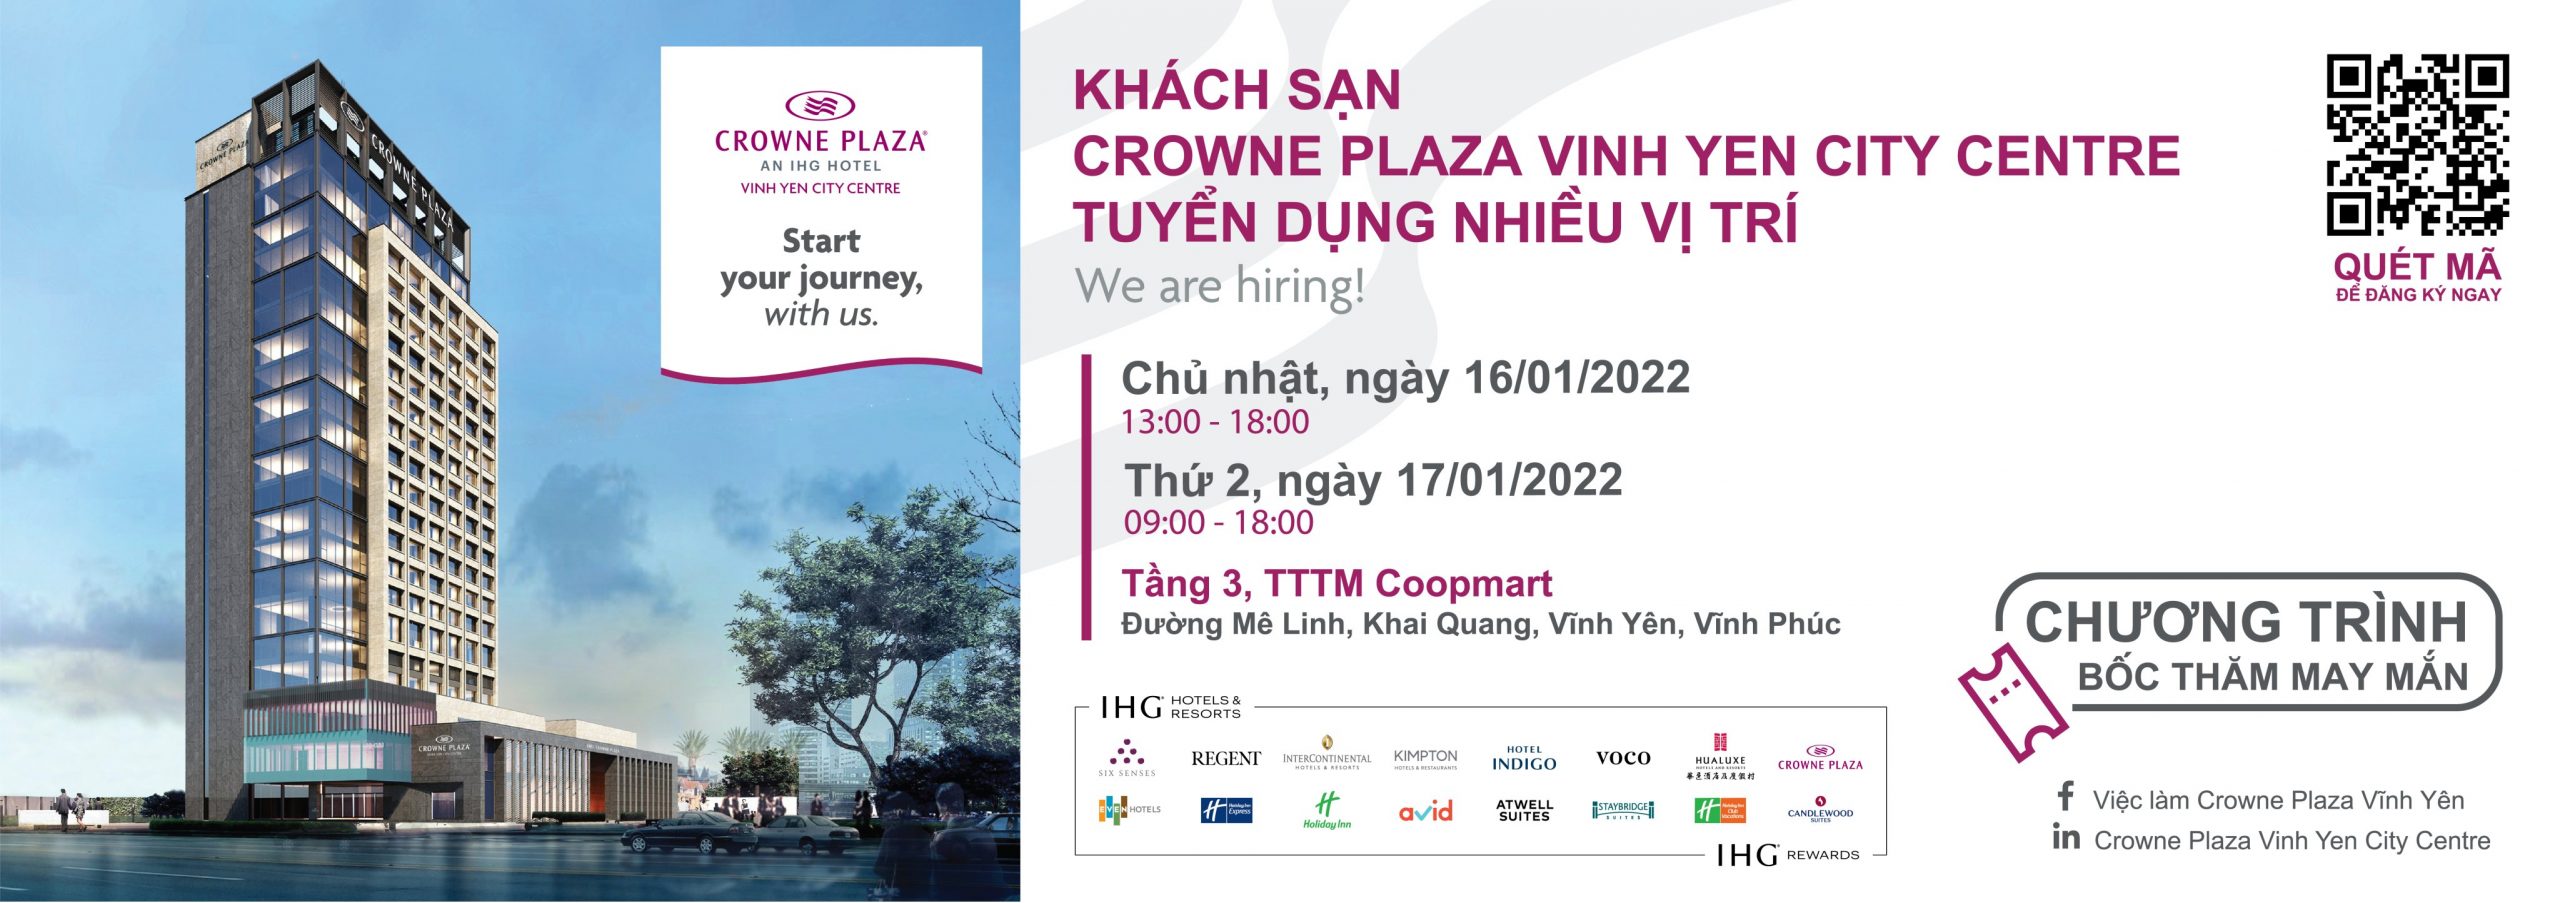 Image Tuyen Dung Khach San Crowne Plaza 2 080122 033810 Scaled